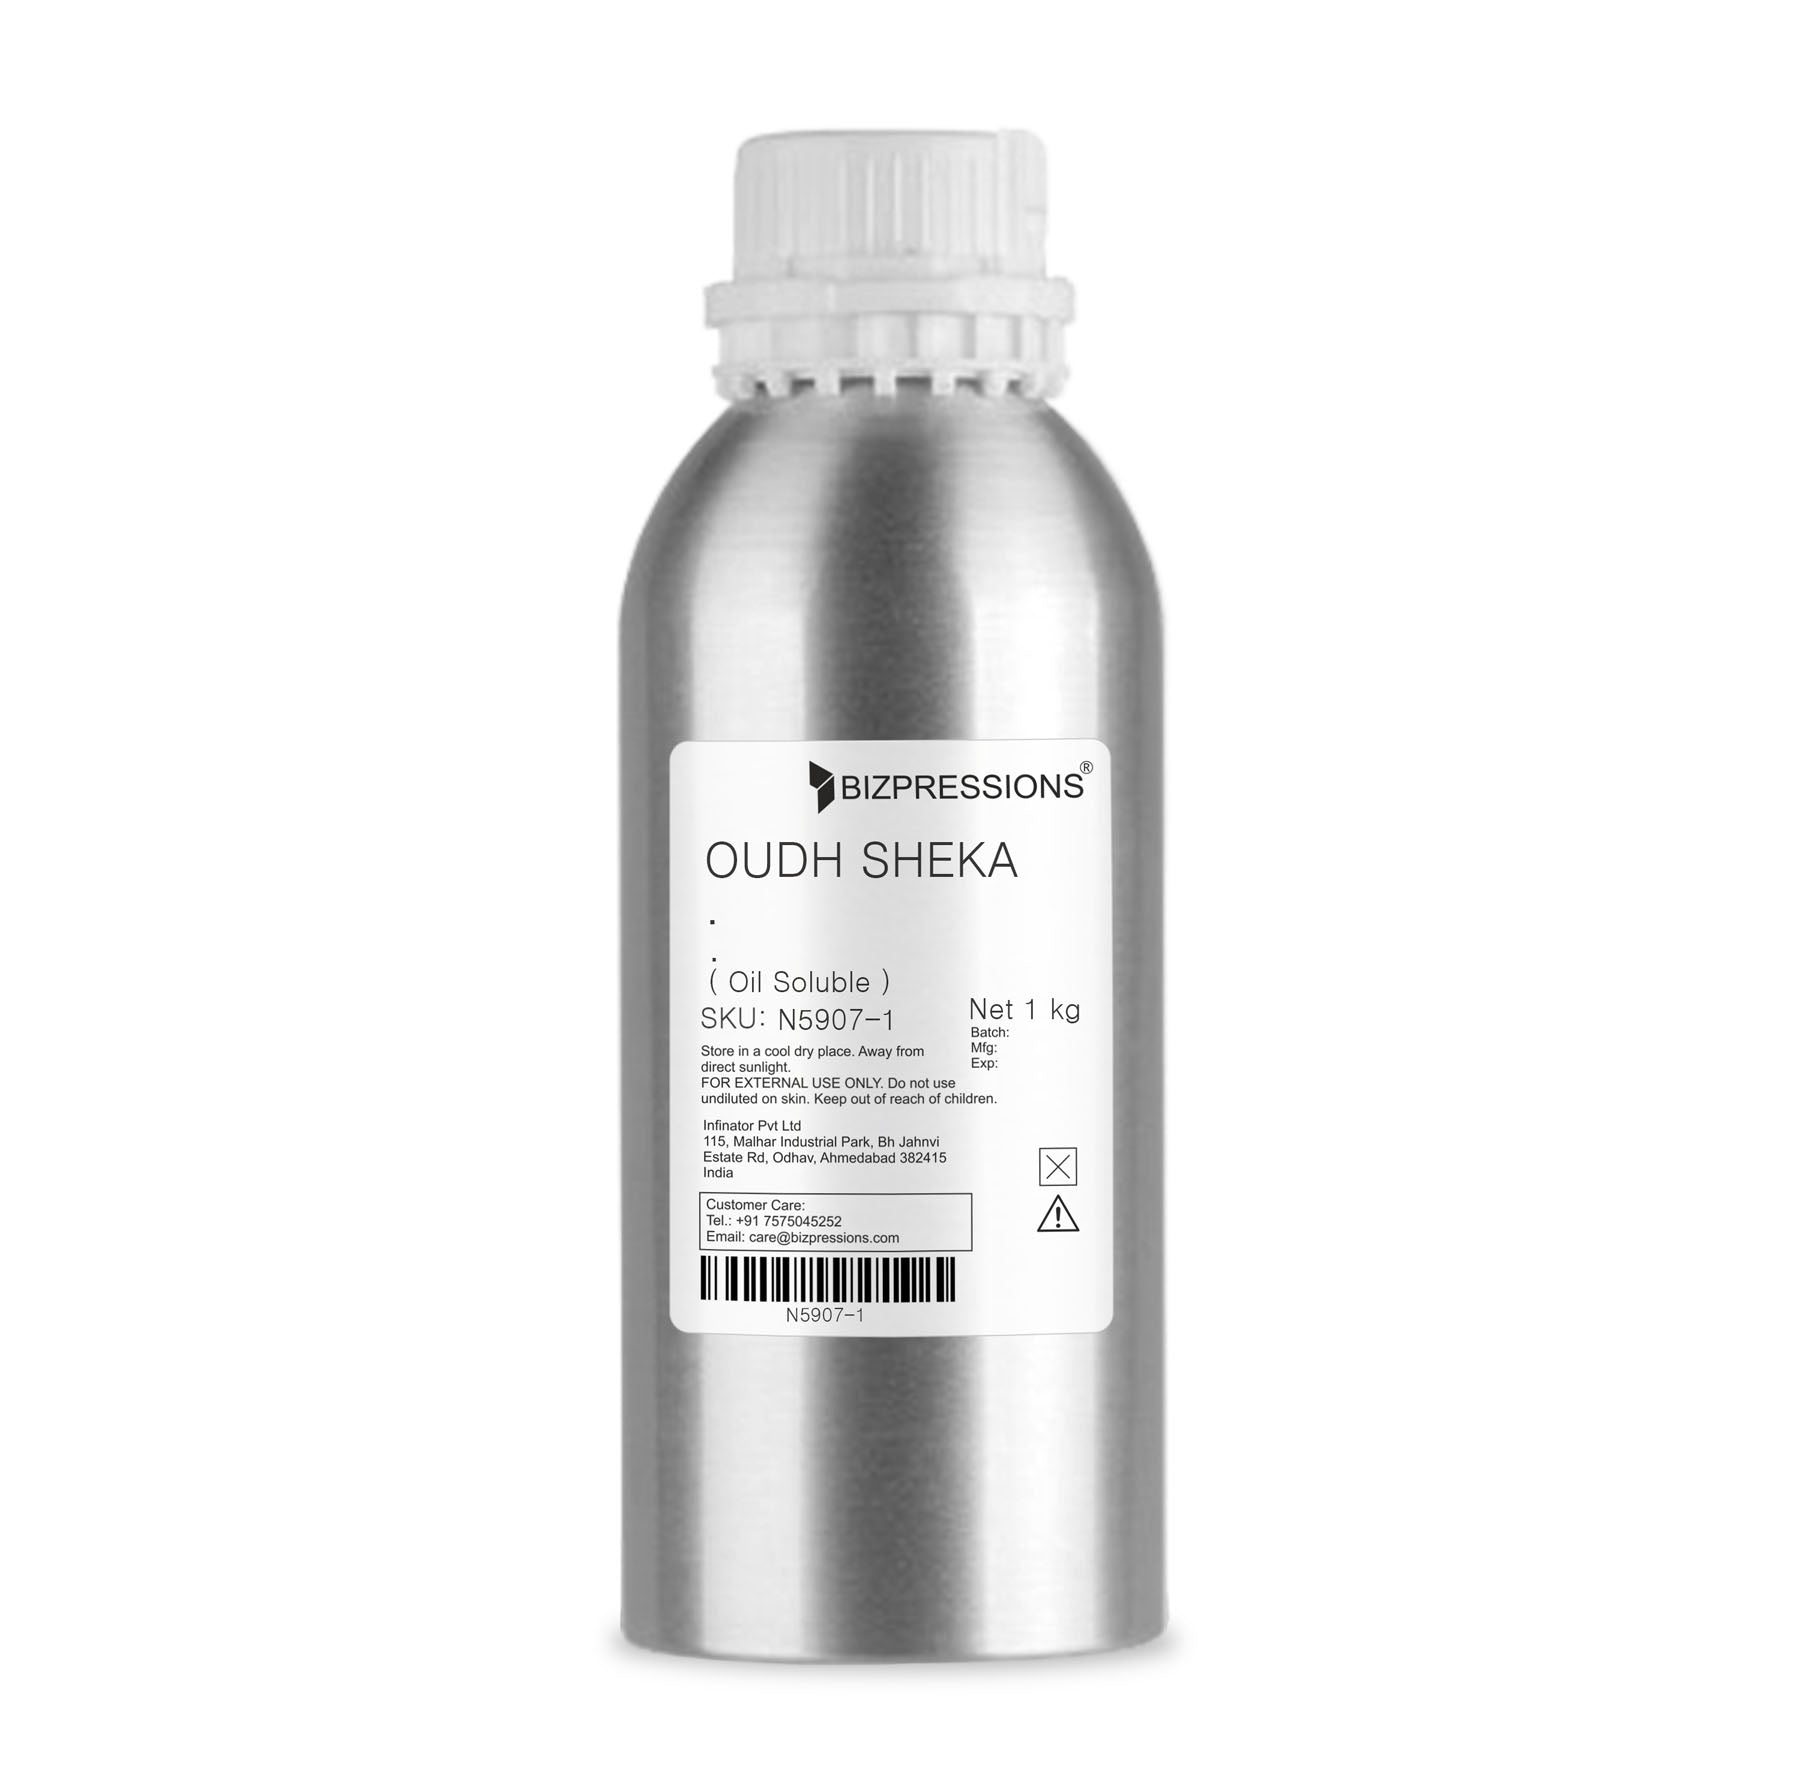 OUDH SHEKA - Fragrance ( Oil Soluble ) - 1 kg